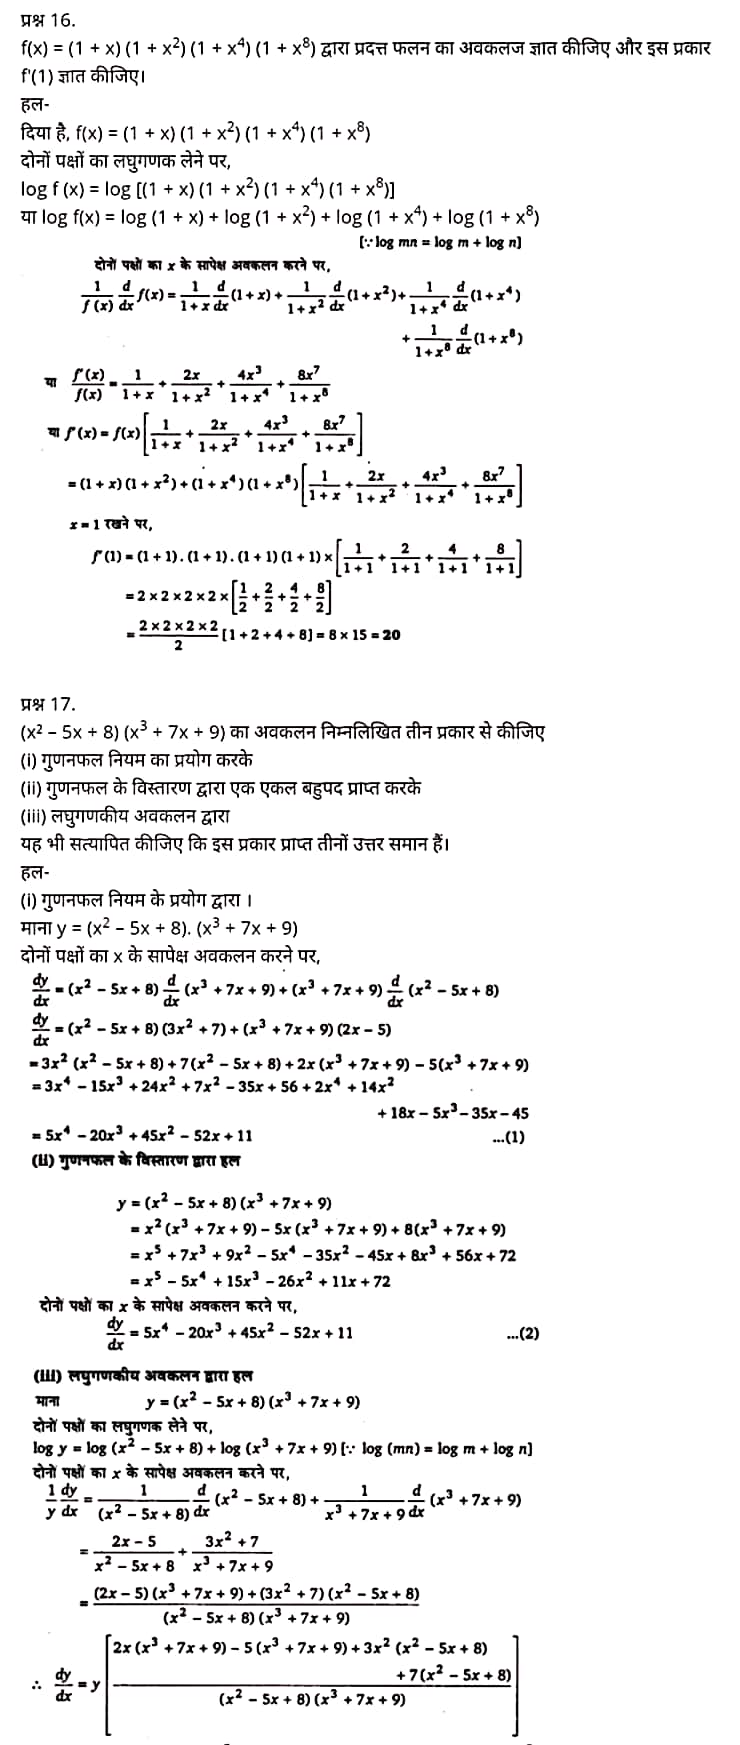 Class 12 Maths Chapter 5, Continuity and Differentiability Hindi Medium,  मैथ्स कक्षा 12 नोट्स pdf,  मैथ्स कक्षा 12 नोट्स 2020 NCERT,  मैथ्स कक्षा 12 PDF,  मैथ्स पुस्तक,  मैथ्स की बुक,  मैथ्स प्रश्नोत्तरी Class 12, 12 वीं मैथ्स पुस्तक RBSE,  बिहार बोर्ड 12 वीं मैथ्स नोट्स,   12th Maths book in hindi, 12th Maths notes in hindi, cbse books for class 12, cbse books in hindi, cbse ncert books, class 12 Maths notes in hindi,  class 12 hindi ncert solutions, Maths 2020, Maths 2021, Maths 2022, Maths book class 12, Maths book in hindi, Maths class 12 in hindi, Maths notes for class 12 up board in hindi, ncert all books, ncert app in hindi, ncert book solution, ncert books class 10, ncert books class 12, ncert books for class 7, ncert books for upsc in hindi, ncert books in hindi class 10, ncert books in hindi for class 12 Maths, ncert books in hindi for class 6, ncert books in hindi pdf, ncert class 12 hindi book, ncert english book, ncert Maths book in hindi, ncert Maths books in hindi pdf, ncert Maths class 12, ncert in hindi,  old ncert books in hindi, online ncert books in hindi,  up board 12th, up board 12th syllabus, up board class 10 hindi book, up board class 12 books, up board class 12 new syllabus, up Board Maths 2020, up Board Maths 2021, up Board Maths 2022, up Board Maths 2023, up board intermediate Maths syllabus, up board intermediate syllabus 2021, Up board Master 2021, up board model paper 2021, up board model paper all subject, up board new syllabus of class 12th Maths, up board paper 2021, Up board syllabus 2021, UP board syllabus 2022,  12 veen maiths buk hindee mein, 12 veen maiths nots hindee mein, seebeeesasee kitaaben 12 ke lie, seebeeesasee kitaaben hindee mein, seebeeesasee enaseeaaratee kitaaben, klaas 12 maiths nots in hindee, klaas 12 hindee enaseeteeaar solyooshans, maiths 2020, maiths 2021, maiths 2022, maiths buk klaas 12, maiths buk in hindee, maiths klaas 12 hindee mein, maiths nots phor klaas 12 ap bord in hindee, nchairt all books, nchairt app in hindi, nchairt book solution, nchairt books klaas 10, nchairt books klaas 12, nchairt books kaksha 7 ke lie, nchairt books for hindi mein hindee mein, nchairt books in hindi kaksha 10, nchairt books in hindi ke lie kaksha 12 ganit, nchairt kitaaben hindee mein kaksha 6 ke lie, nchairt pustaken hindee mein, nchairt books 12 hindee pustak, nchairt angrejee pustak mein , nchairt maths book in hindi, nchairt maths books in hindi pdf, nchairt maths chlass 12, nchairt in hindi, puraanee nchairt books in hindi, onalain nchairt books in hindi, bord 12 veen, up bord 12 veen ka silebas, up bord klaas 10 hindee kee pustak , bord kee kaksha 12 kee kitaaben, bord kee kaksha 12 kee naee paathyakram, bord kee ganit 2020, bord kee ganit 2021, ganit kee padhaee s 2022, up bord maiths 2023, up bord intarameediet maiths silebas, up bord intarameediet silebas 2021, up bord maastar 2021, up bord modal pepar 2021, up bord modal pepar sabhee vishay, up bord nyoo klaasiks oph klaas 12 veen maiths, up bord pepar 2021, up bord paathyakram 2021, yoopee bord paathyakram 2022,  12 वीं मैथ्स पुस्तक हिंदी में, 12 वीं मैथ्स नोट्स हिंदी में, कक्षा 12 के लिए सीबीएससी पुस्तकें, हिंदी में सीबीएससी पुस्तकें, सीबीएससी  पुस्तकें, कक्षा 12 मैथ्स नोट्स हिंदी में, कक्षा 12 हिंदी एनसीईआरटी समाधान, मैथ्स 2020, मैथ्स 2021, मैथ्स 2022, मैथ्स  बुक क्लास 12, मैथ्स बुक इन हिंदी, बायोलॉजी क्लास 12 हिंदी में, मैथ्स नोट्स इन क्लास 12 यूपी  बोर्ड इन हिंदी, एनसीईआरटी मैथ्स की किताब हिंदी में,  बोर्ड 12 वीं तक, 12 वीं तक की पाठ्यक्रम, बोर्ड कक्षा 10 की हिंदी पुस्तक  , बोर्ड की कक्षा 12 की किताबें, बोर्ड की कक्षा 12 की नई पाठ्यक्रम, बोर्ड मैथ्स 2020, यूपी   बोर्ड मैथ्स 2021, यूपी  बोर्ड मैथ्स 2022, यूपी  बोर्ड मैथ्स 2023, यूपी  बोर्ड इंटरमीडिएट बायोलॉजी सिलेबस, यूपी  बोर्ड इंटरमीडिएट सिलेबस 2021, यूपी  बोर्ड मास्टर 2021, यूपी  बोर्ड मॉडल पेपर 2021, यूपी  मॉडल पेपर सभी विषय, यूपी  बोर्ड न्यू क्लास का सिलेबस  12 वीं मैथ्स, अप बोर्ड पेपर 2021, यूपी बोर्ड सिलेबस 2021, यूपी बोर्ड सिलेबस 2022,